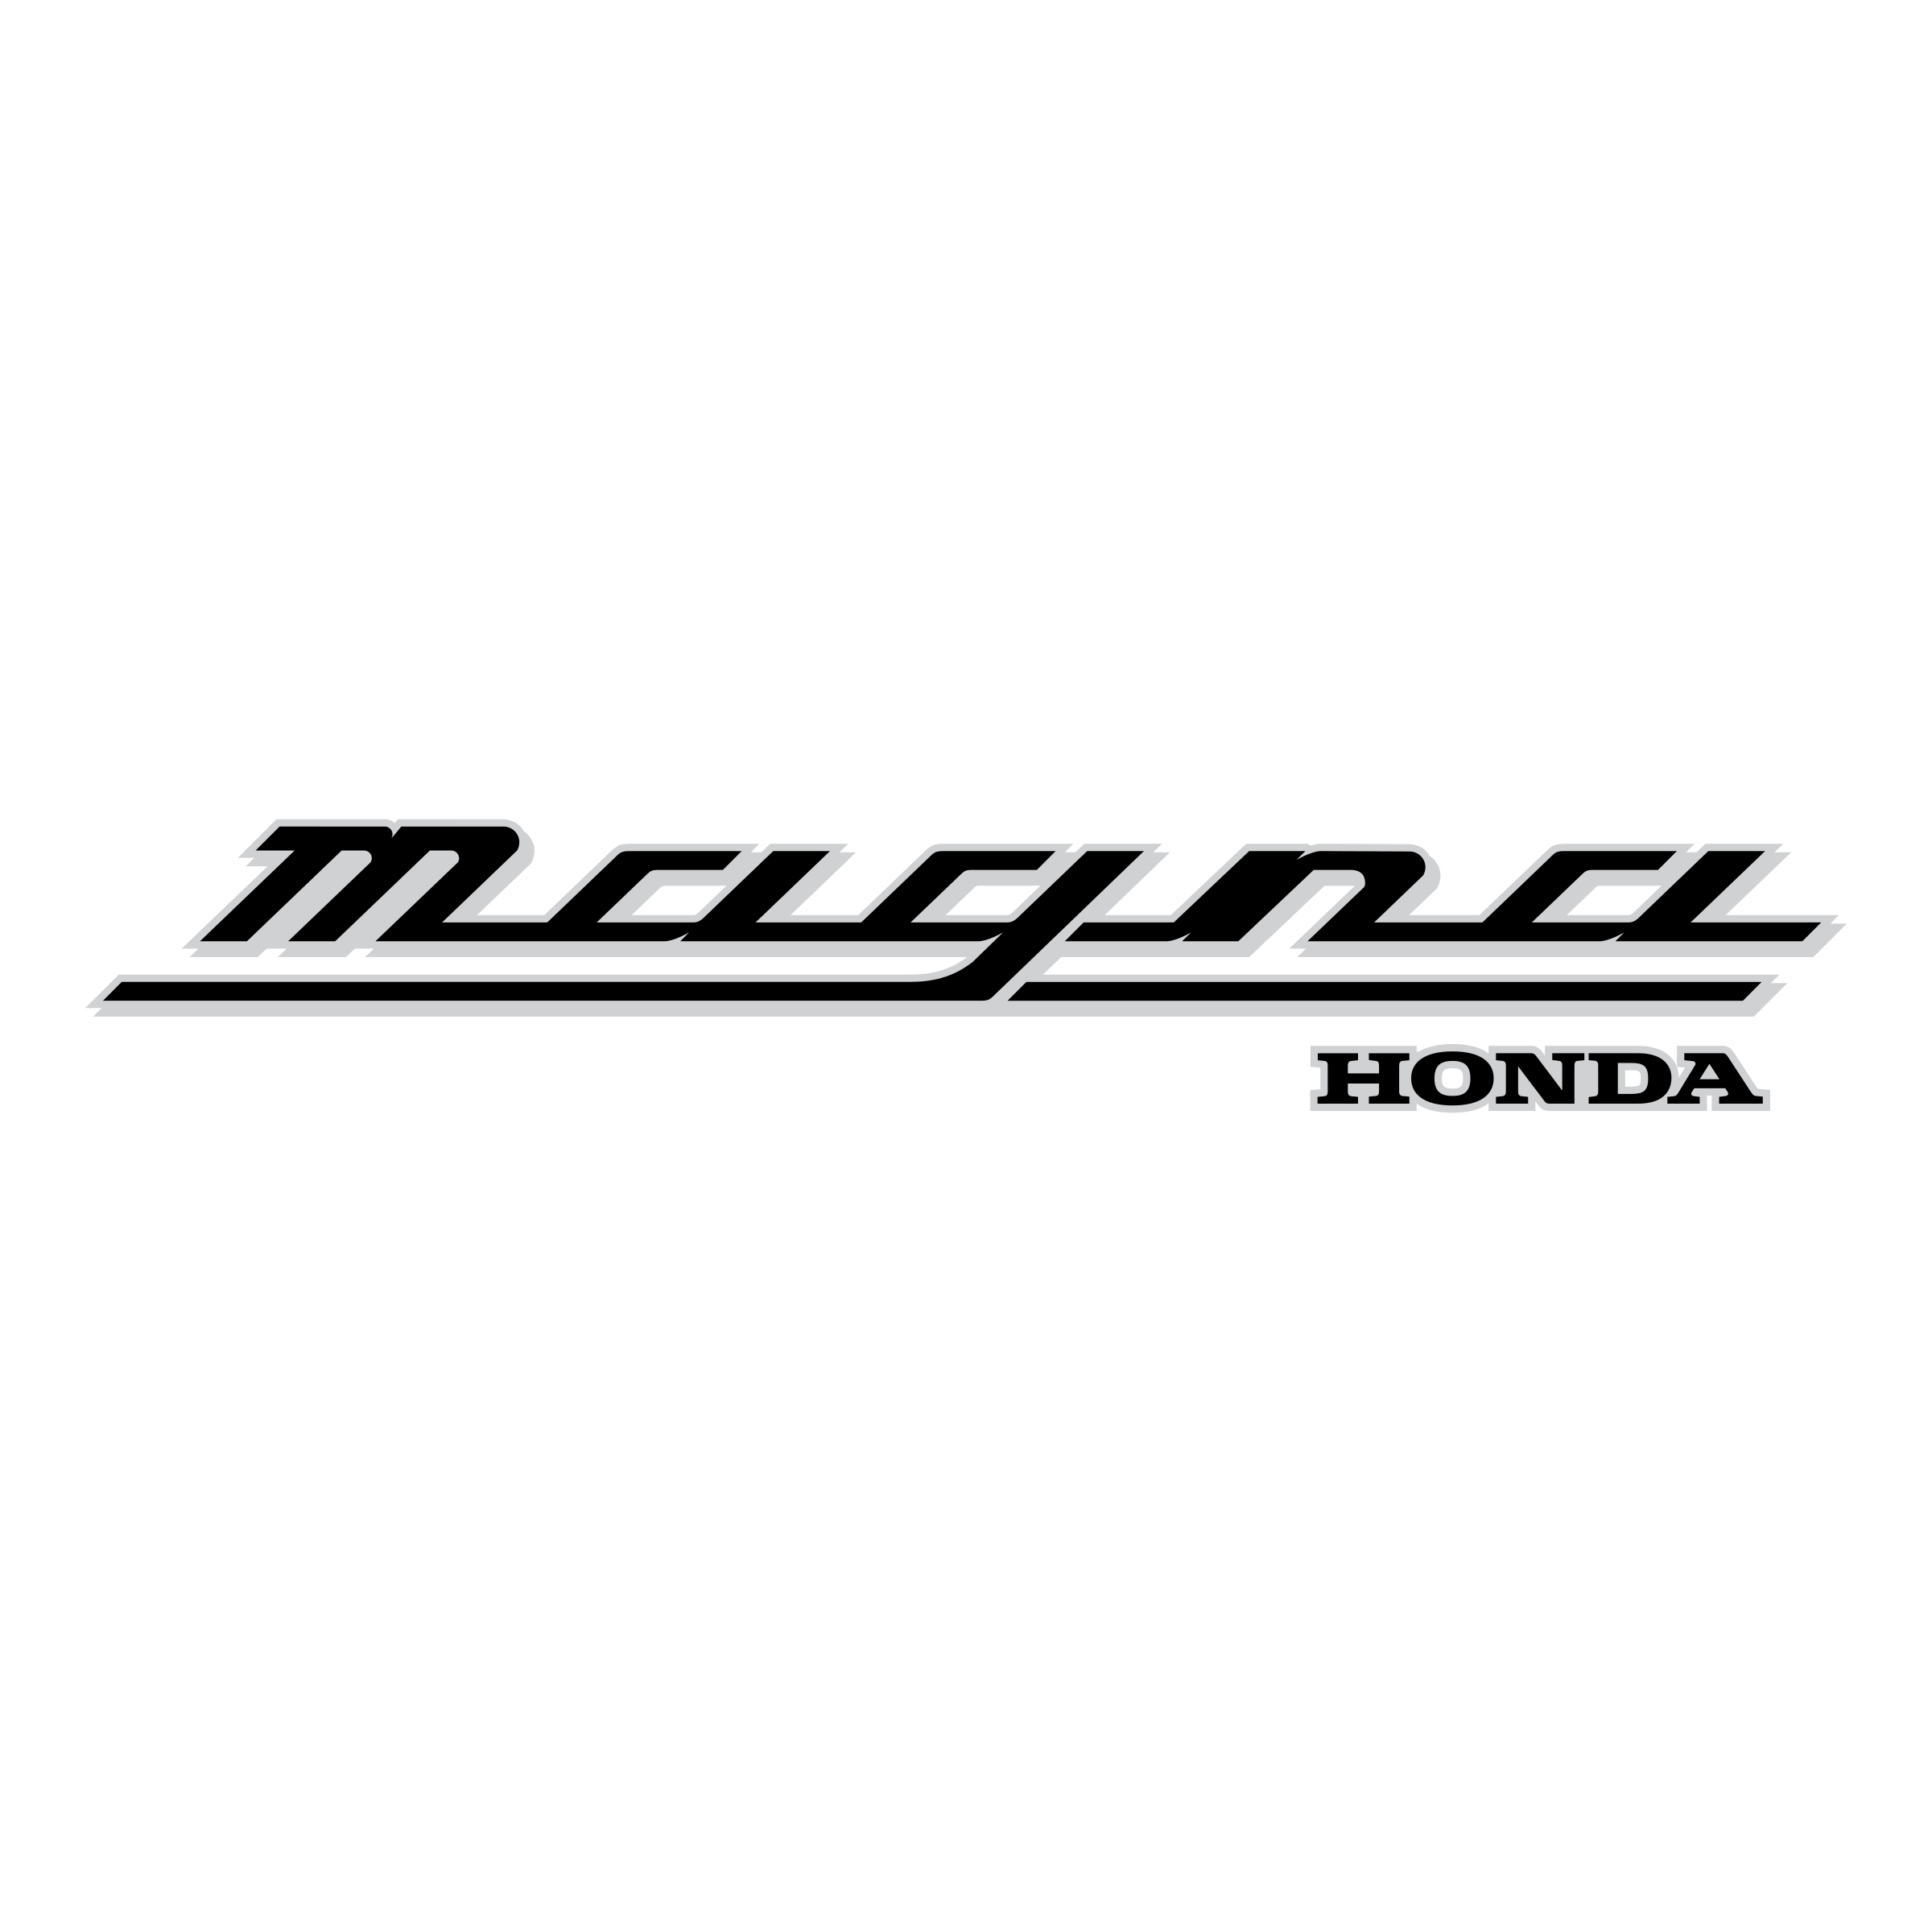 Magna Logo - Magna Logo PNG Transparent & SVG Vector